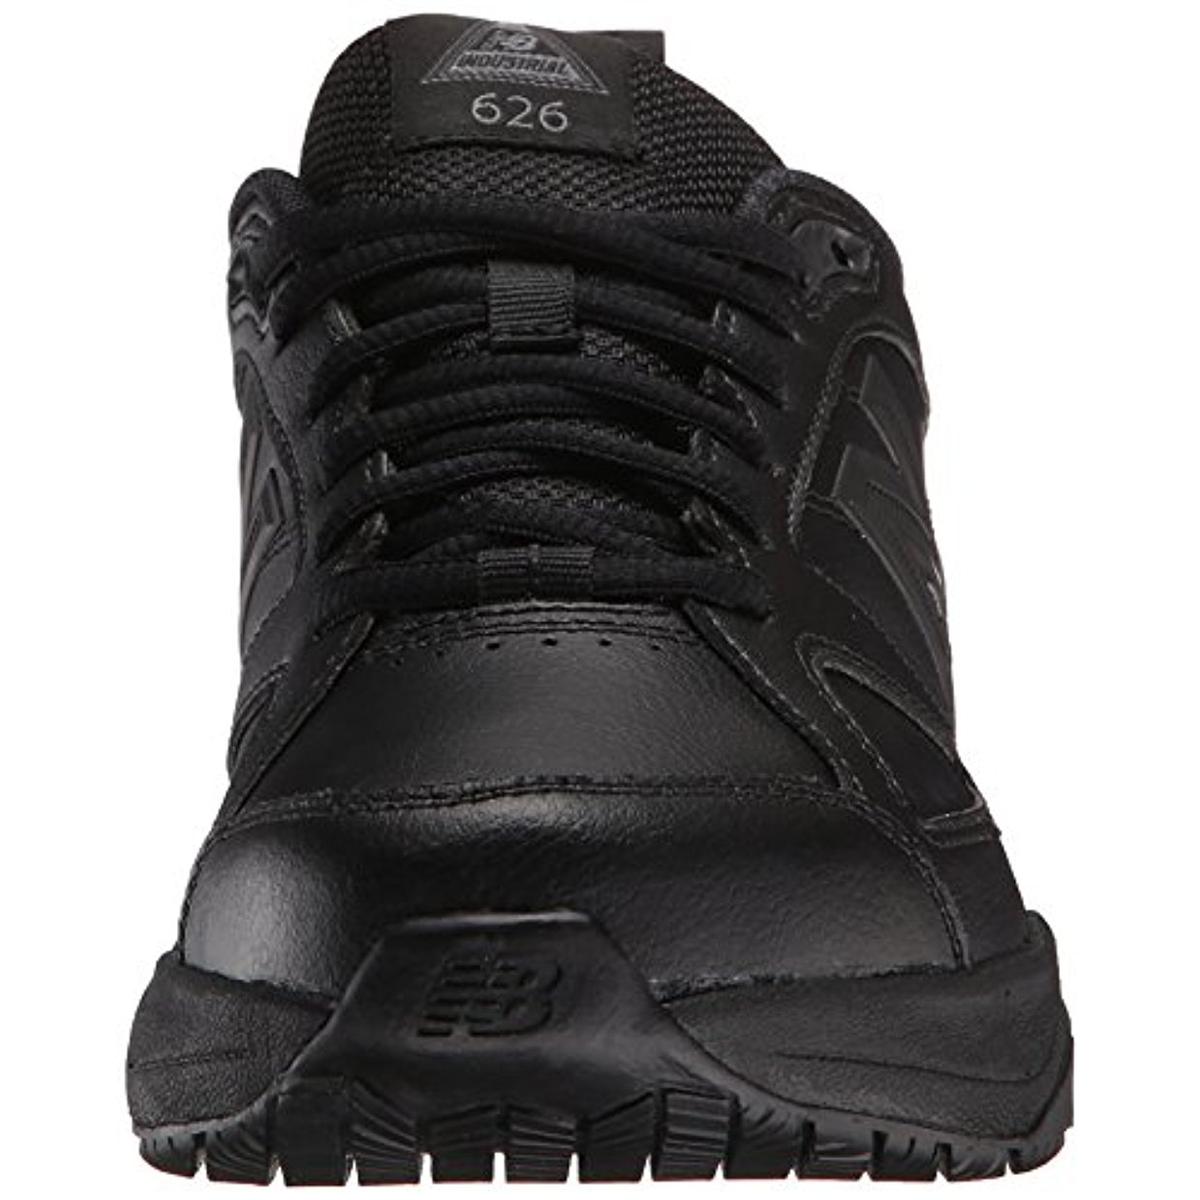 New Balance Womens 626 Black Leather Sneakers Shoes 8 Medium (B,M) BHFO ...